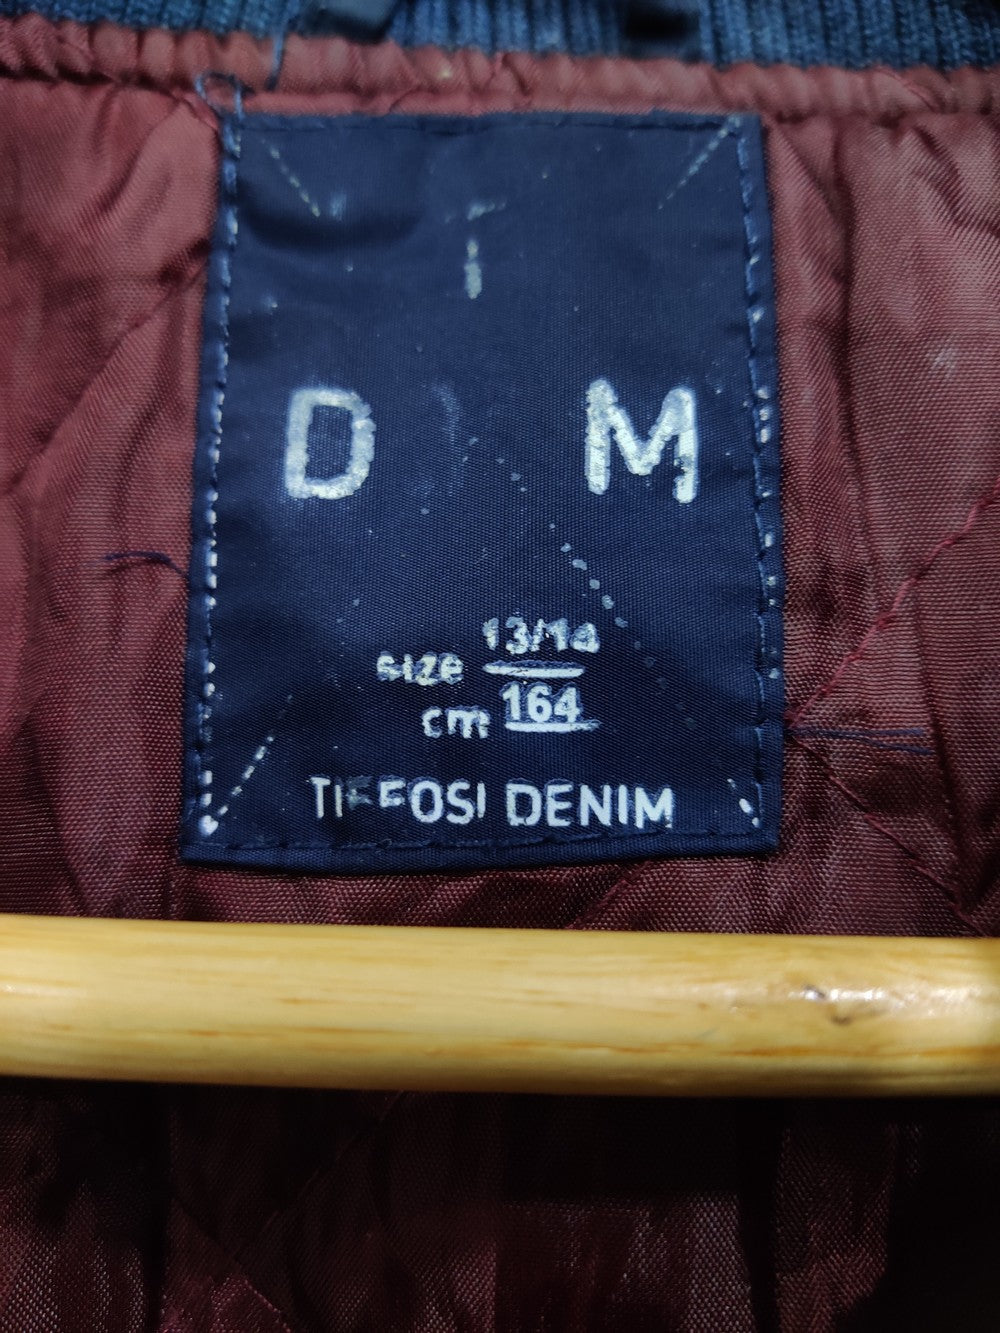 Tiffosi Denim Branded Original Ban Collar Jacket For Men